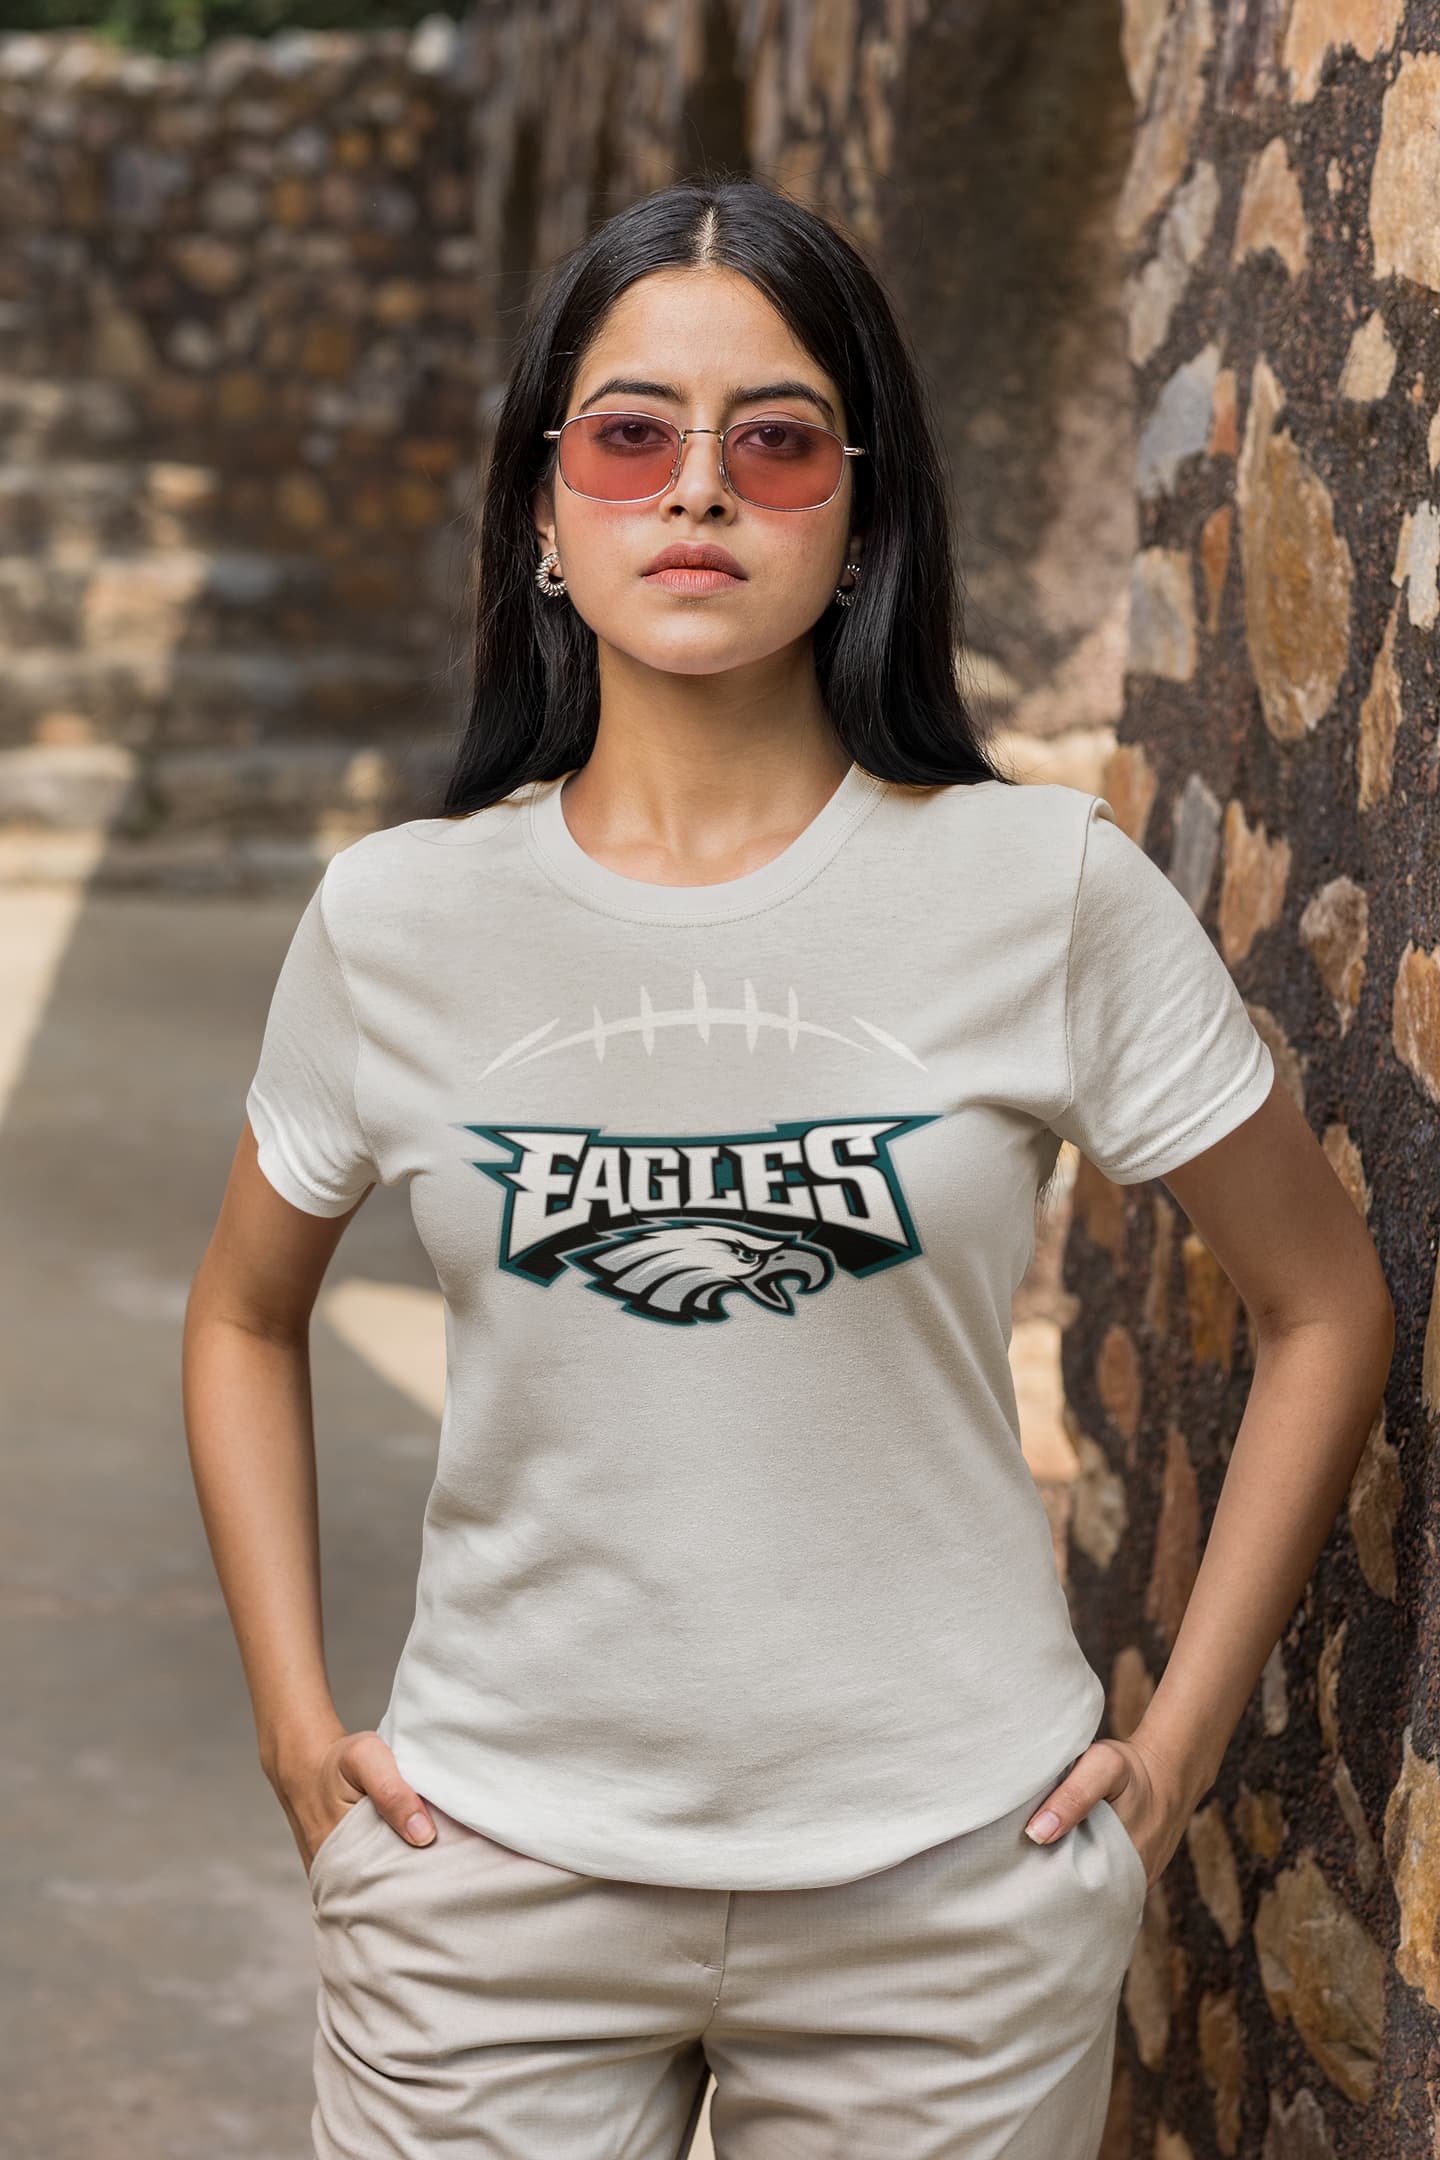 womens vintage eagles sweatshirt